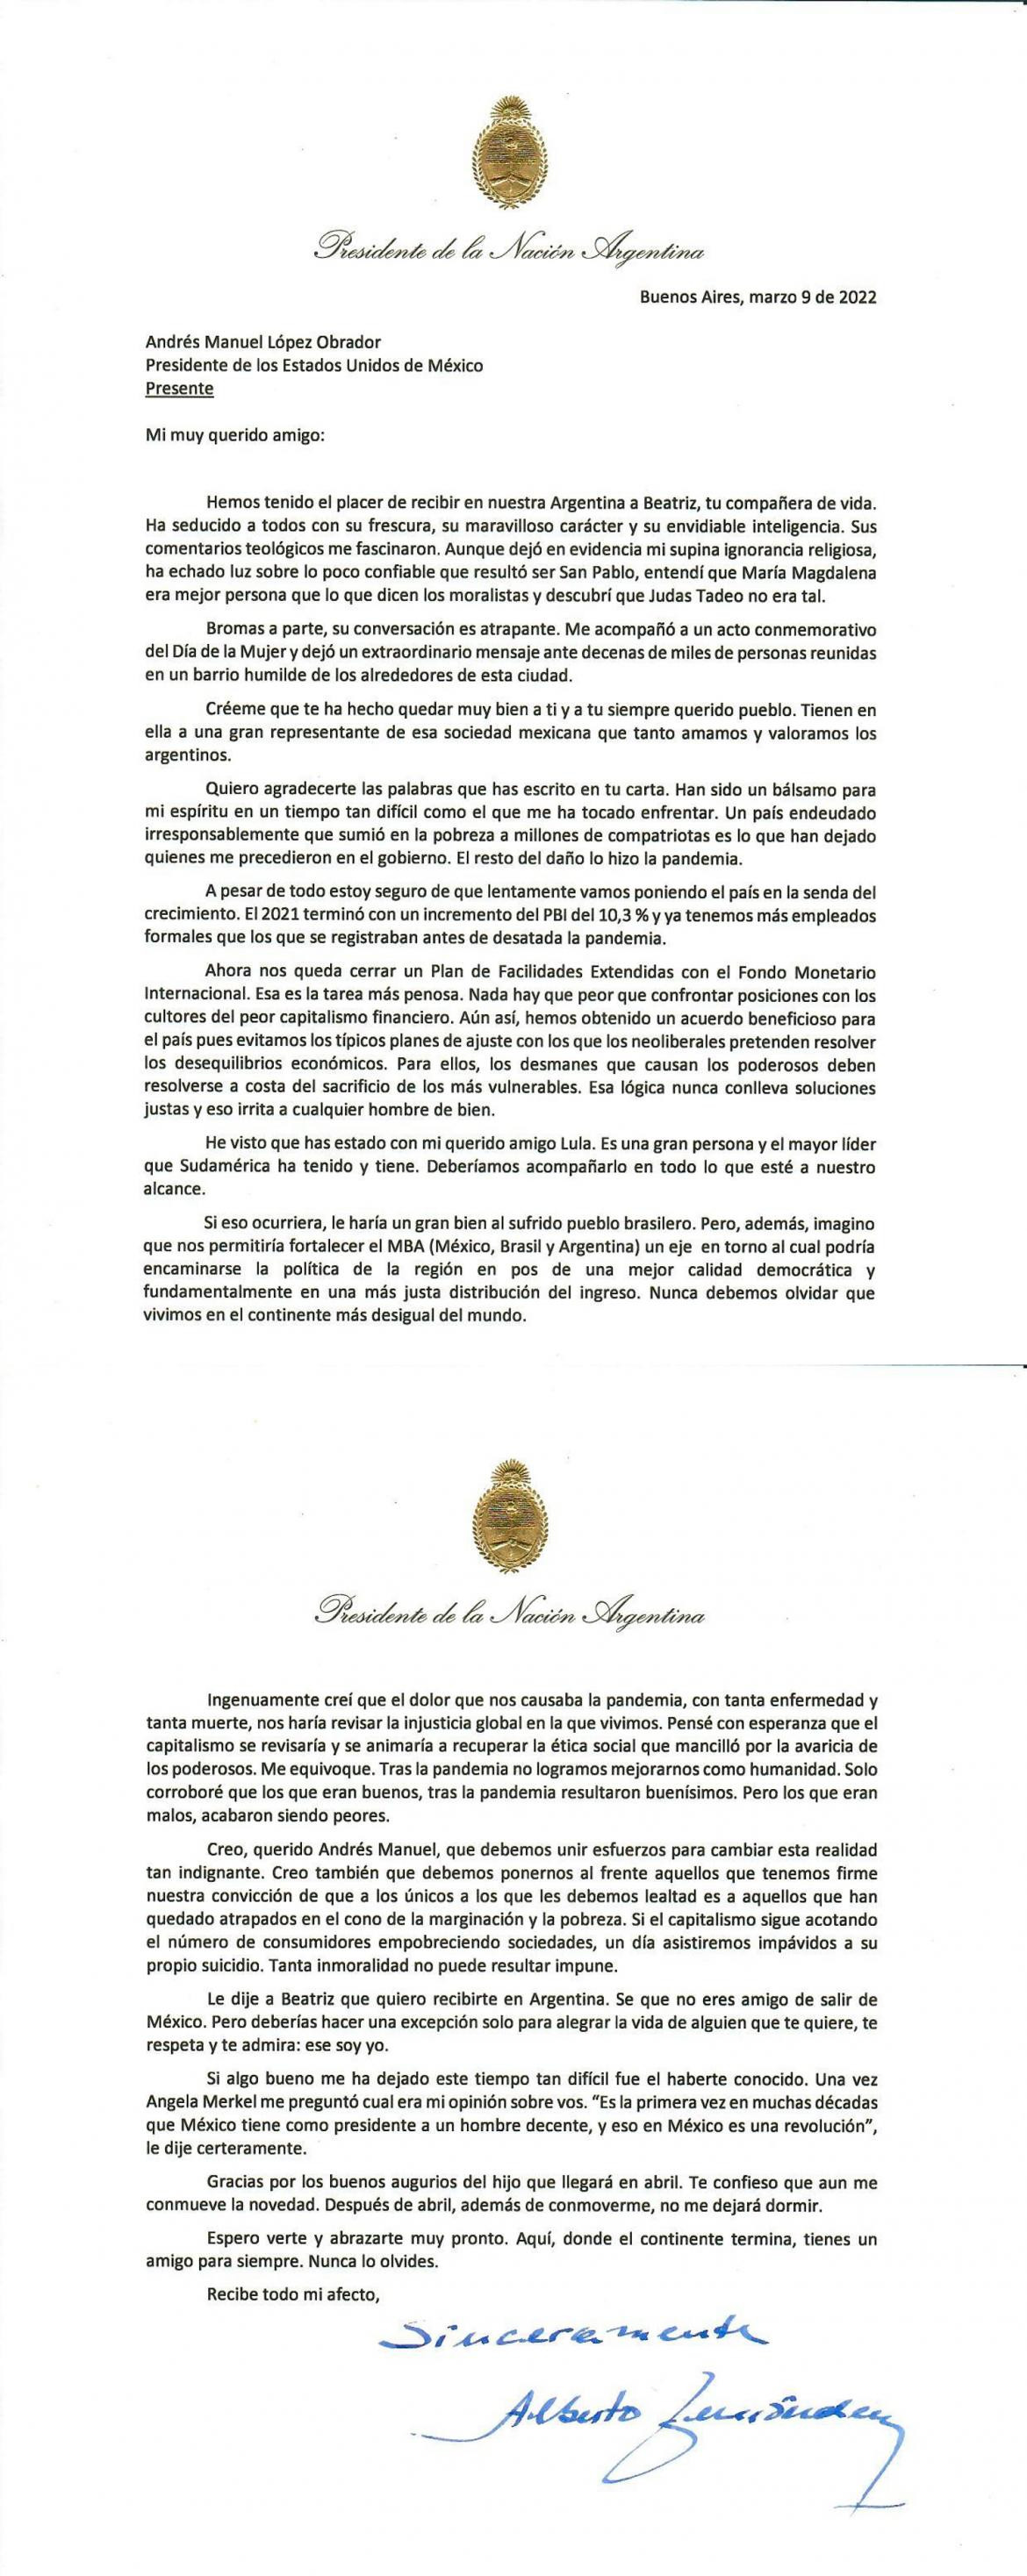 Carta de Alberto Fernández a Andrés Manuel López Obrador